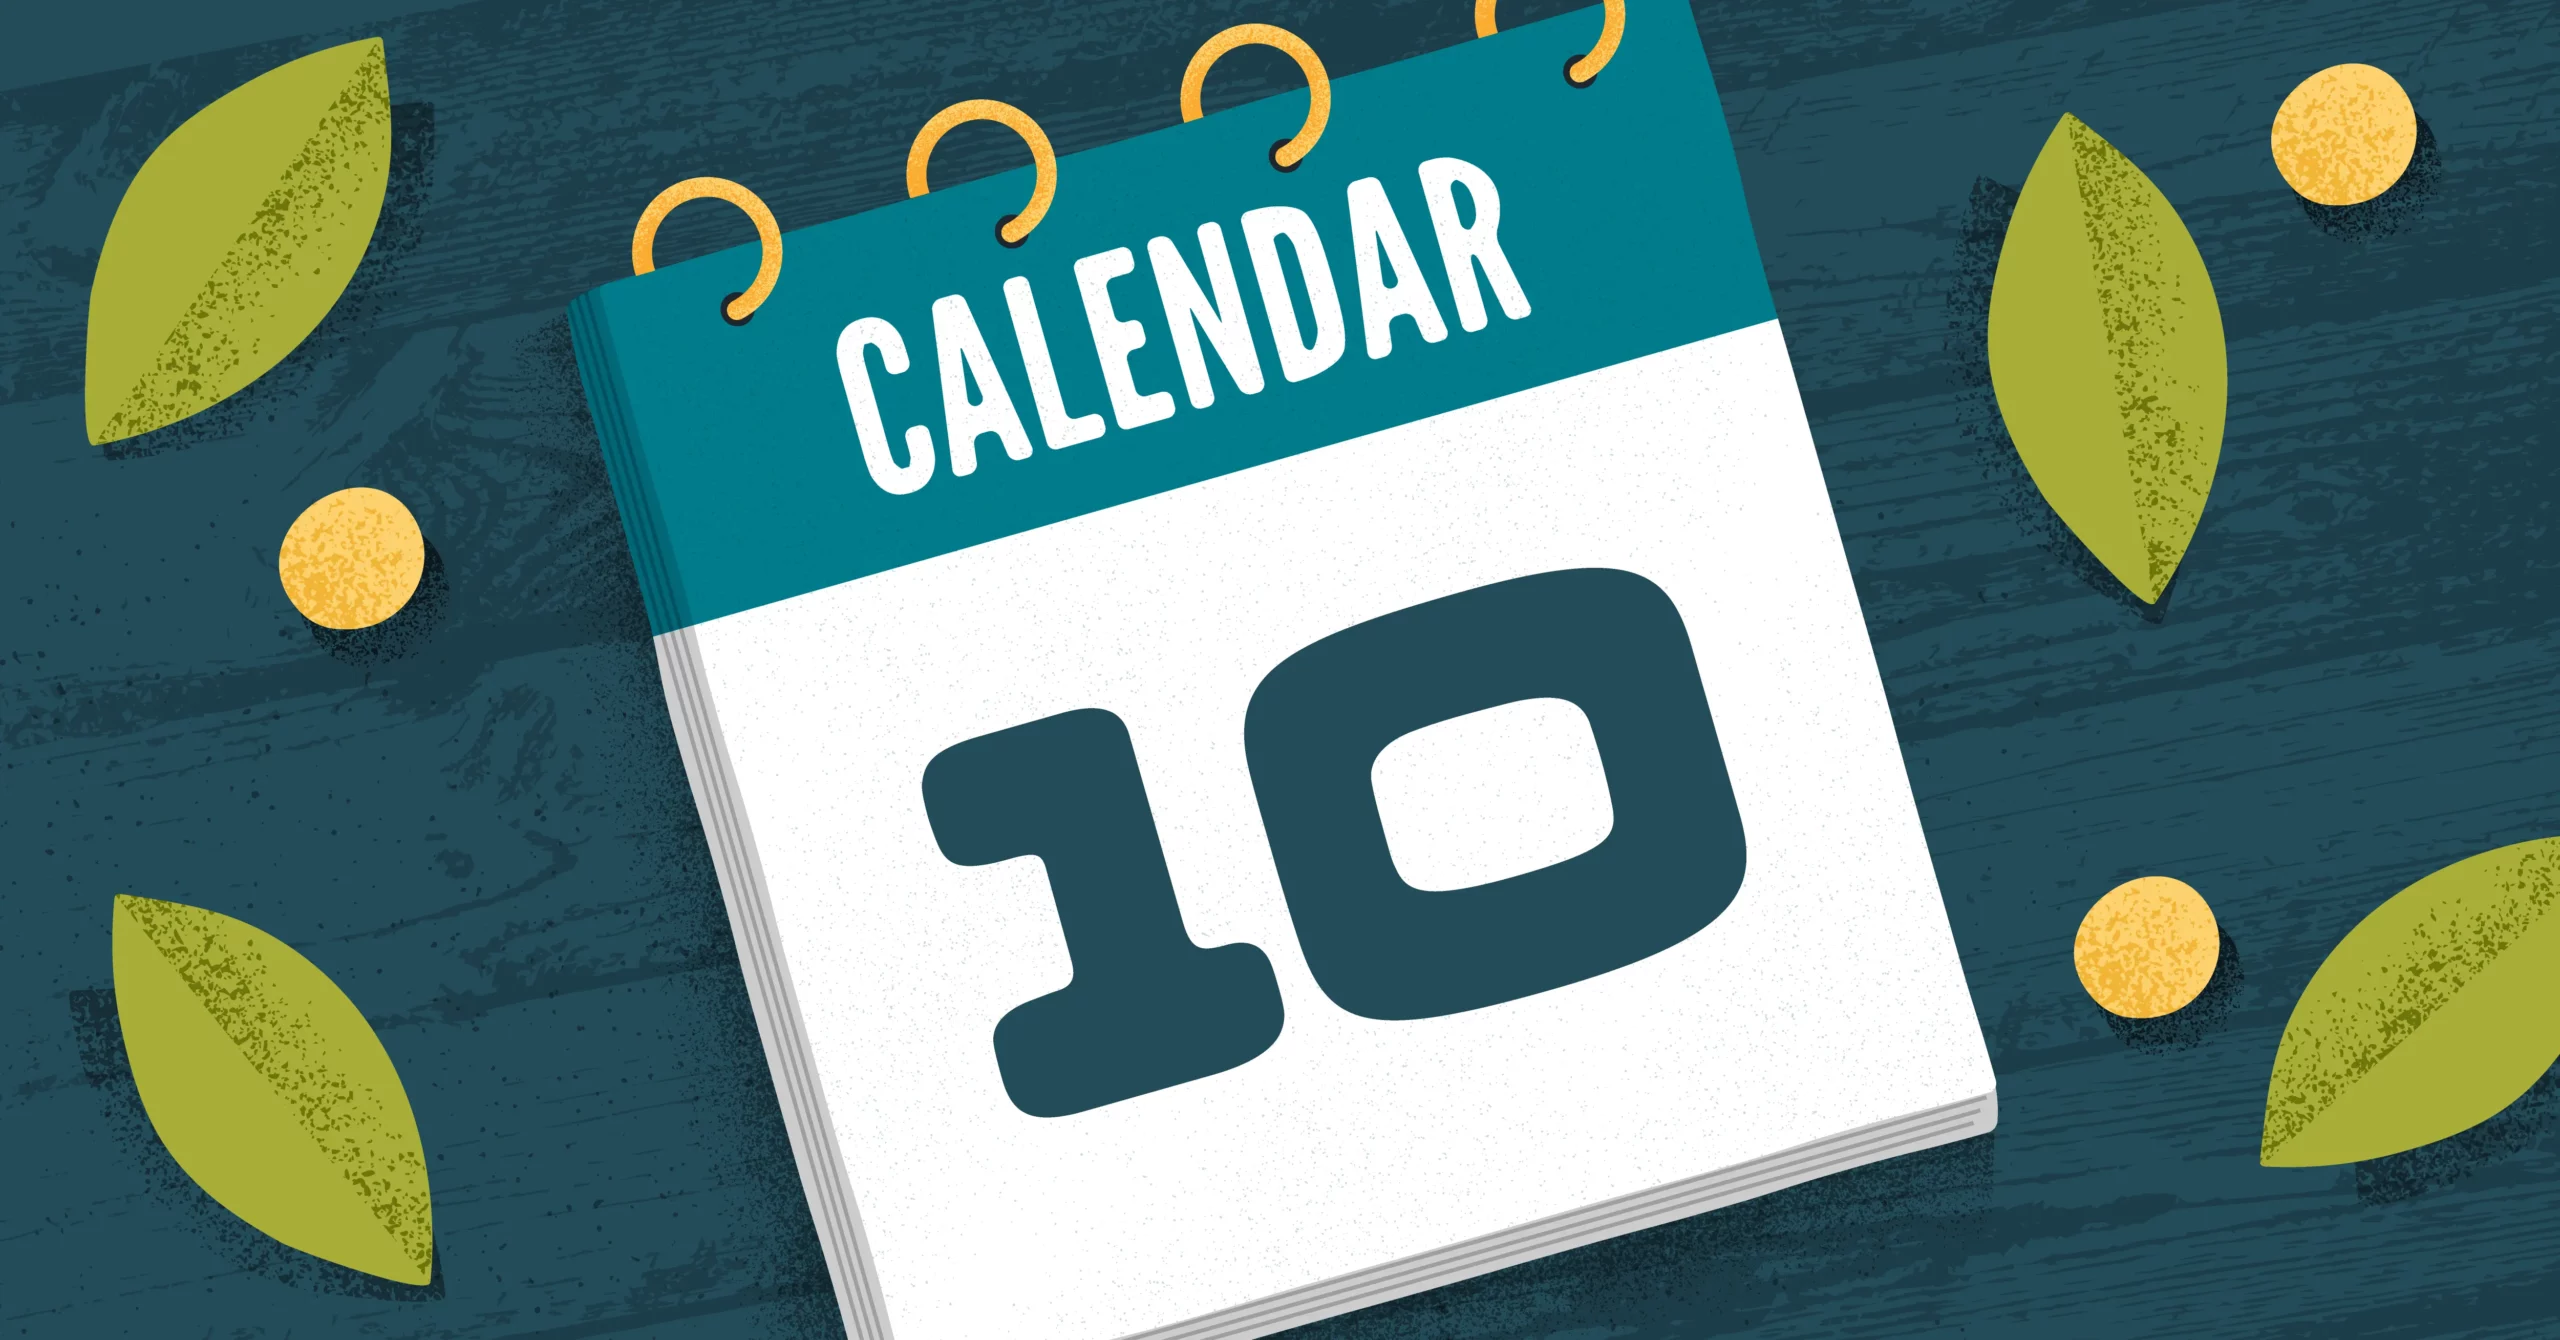 Calendar on the 10th day